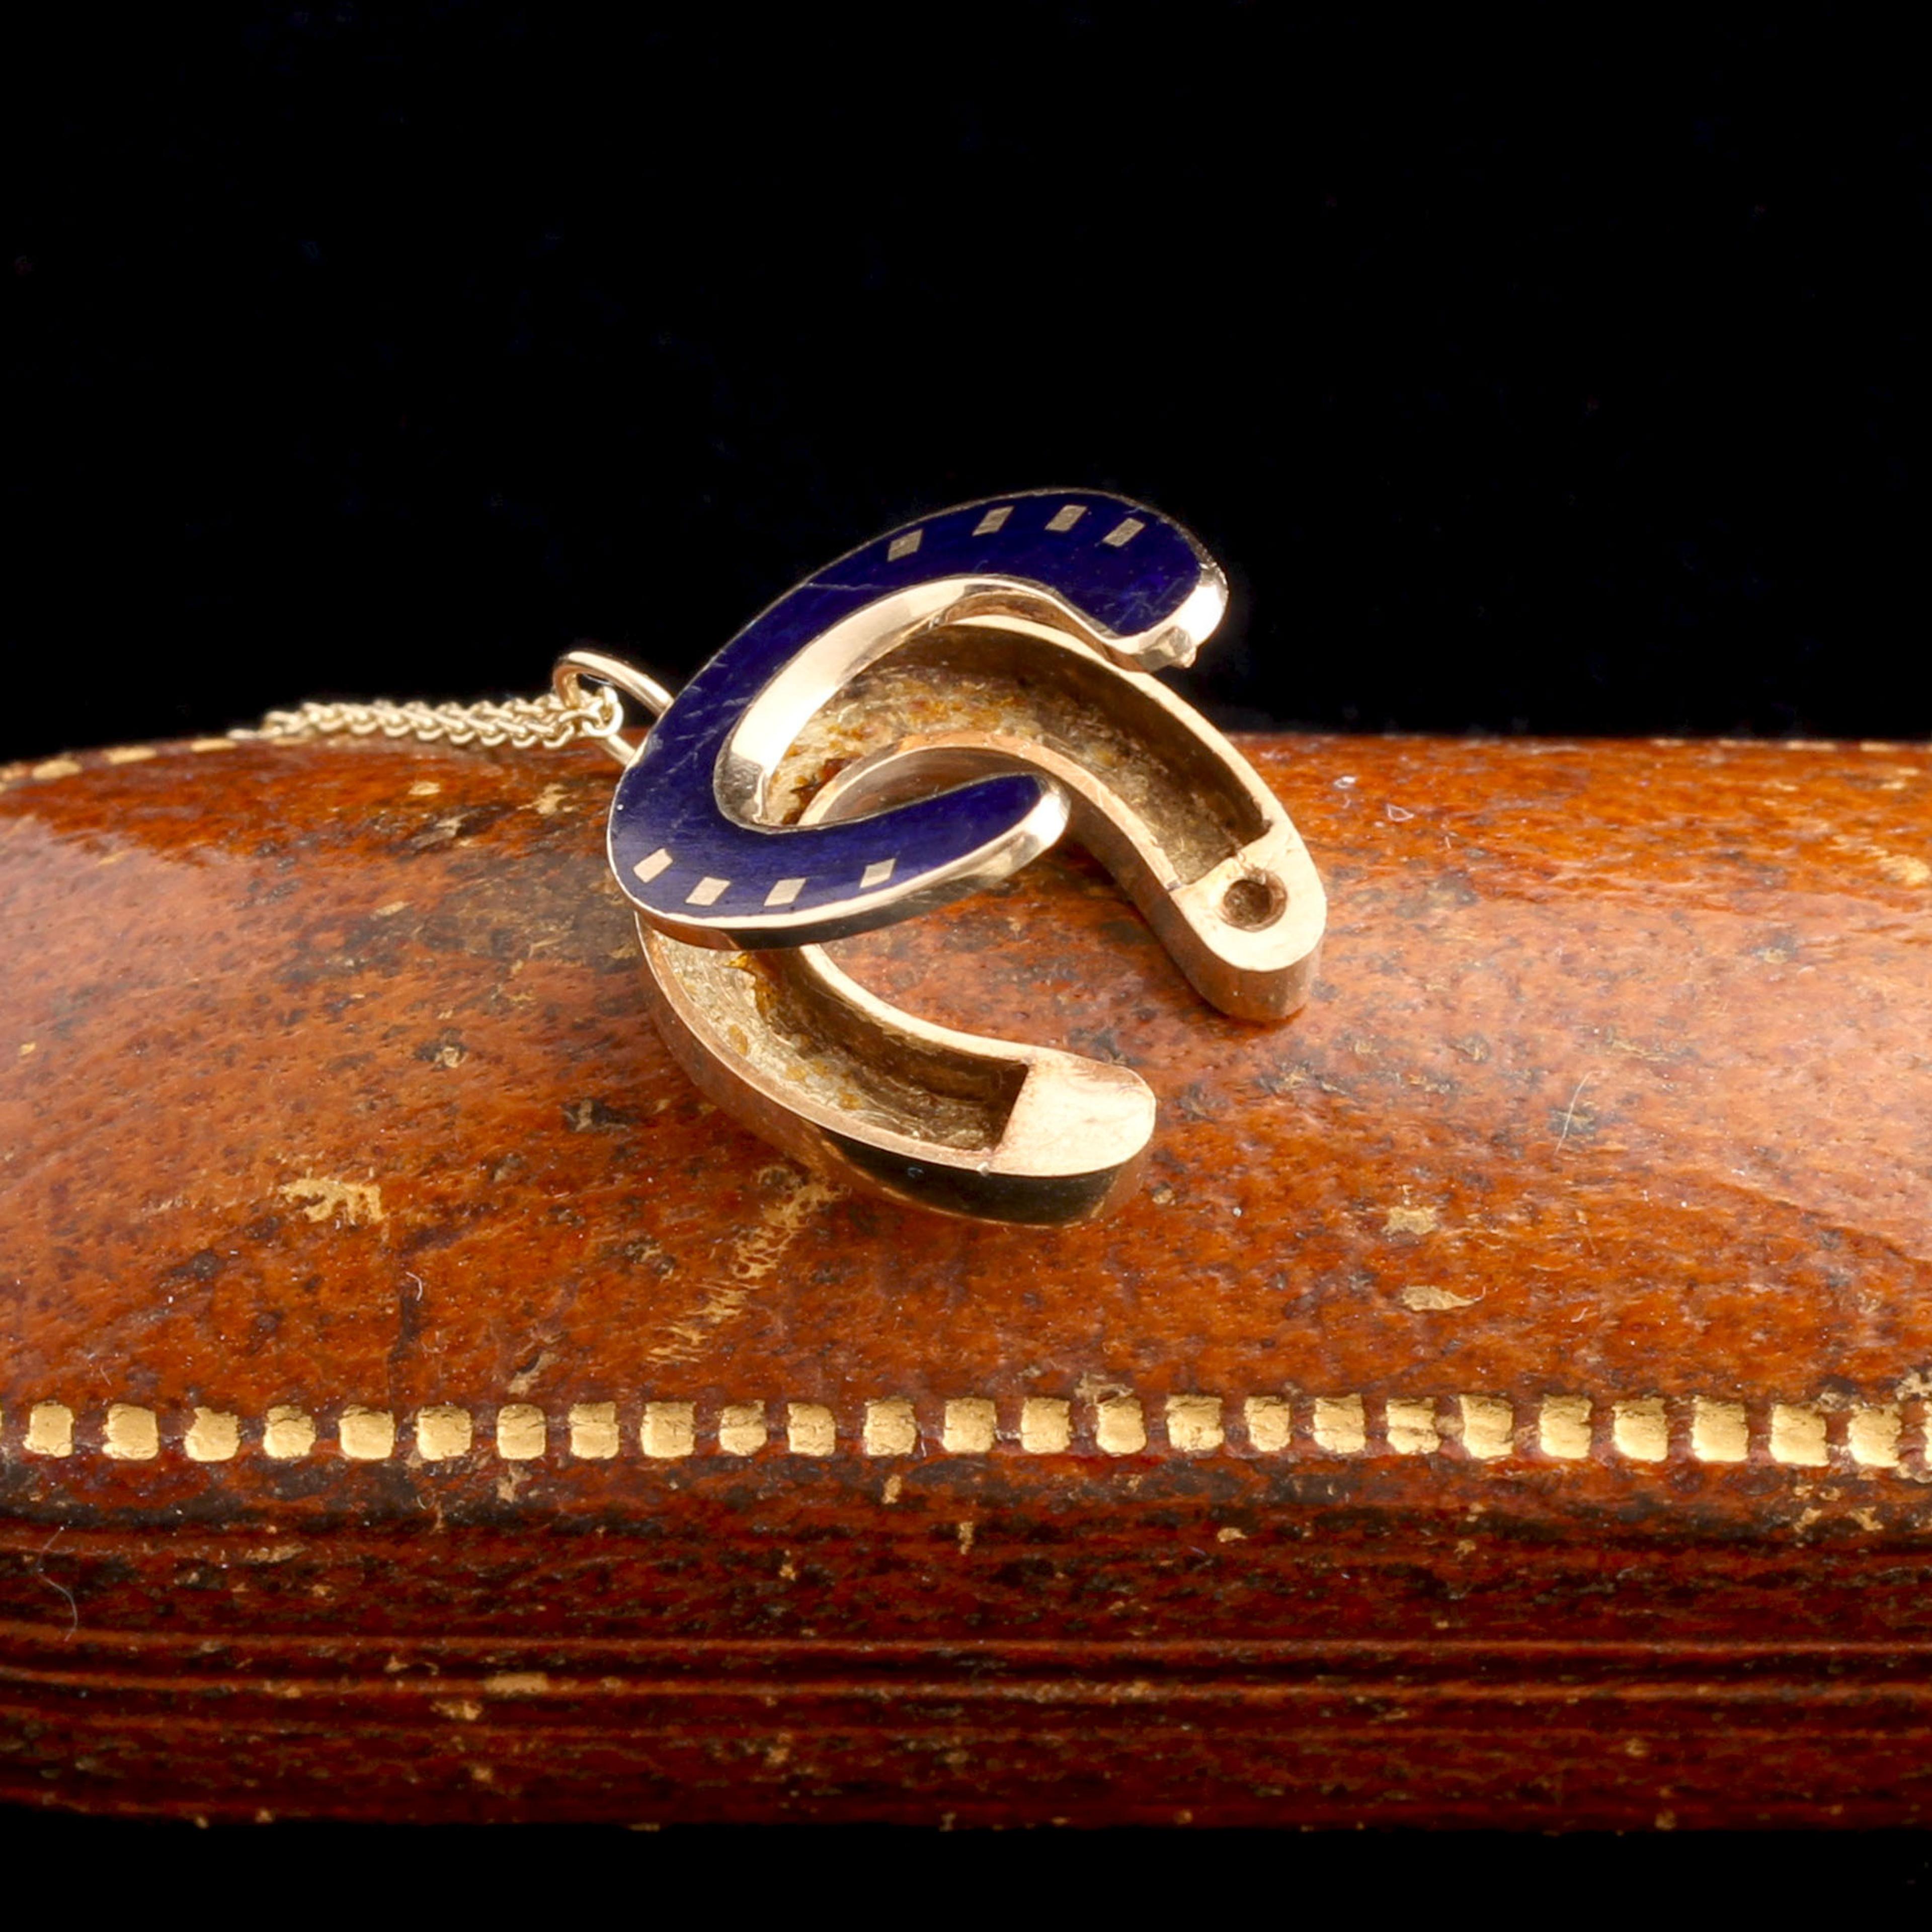 Detail of Edwardian Enamel Horseshoe Locket Necklace shown open